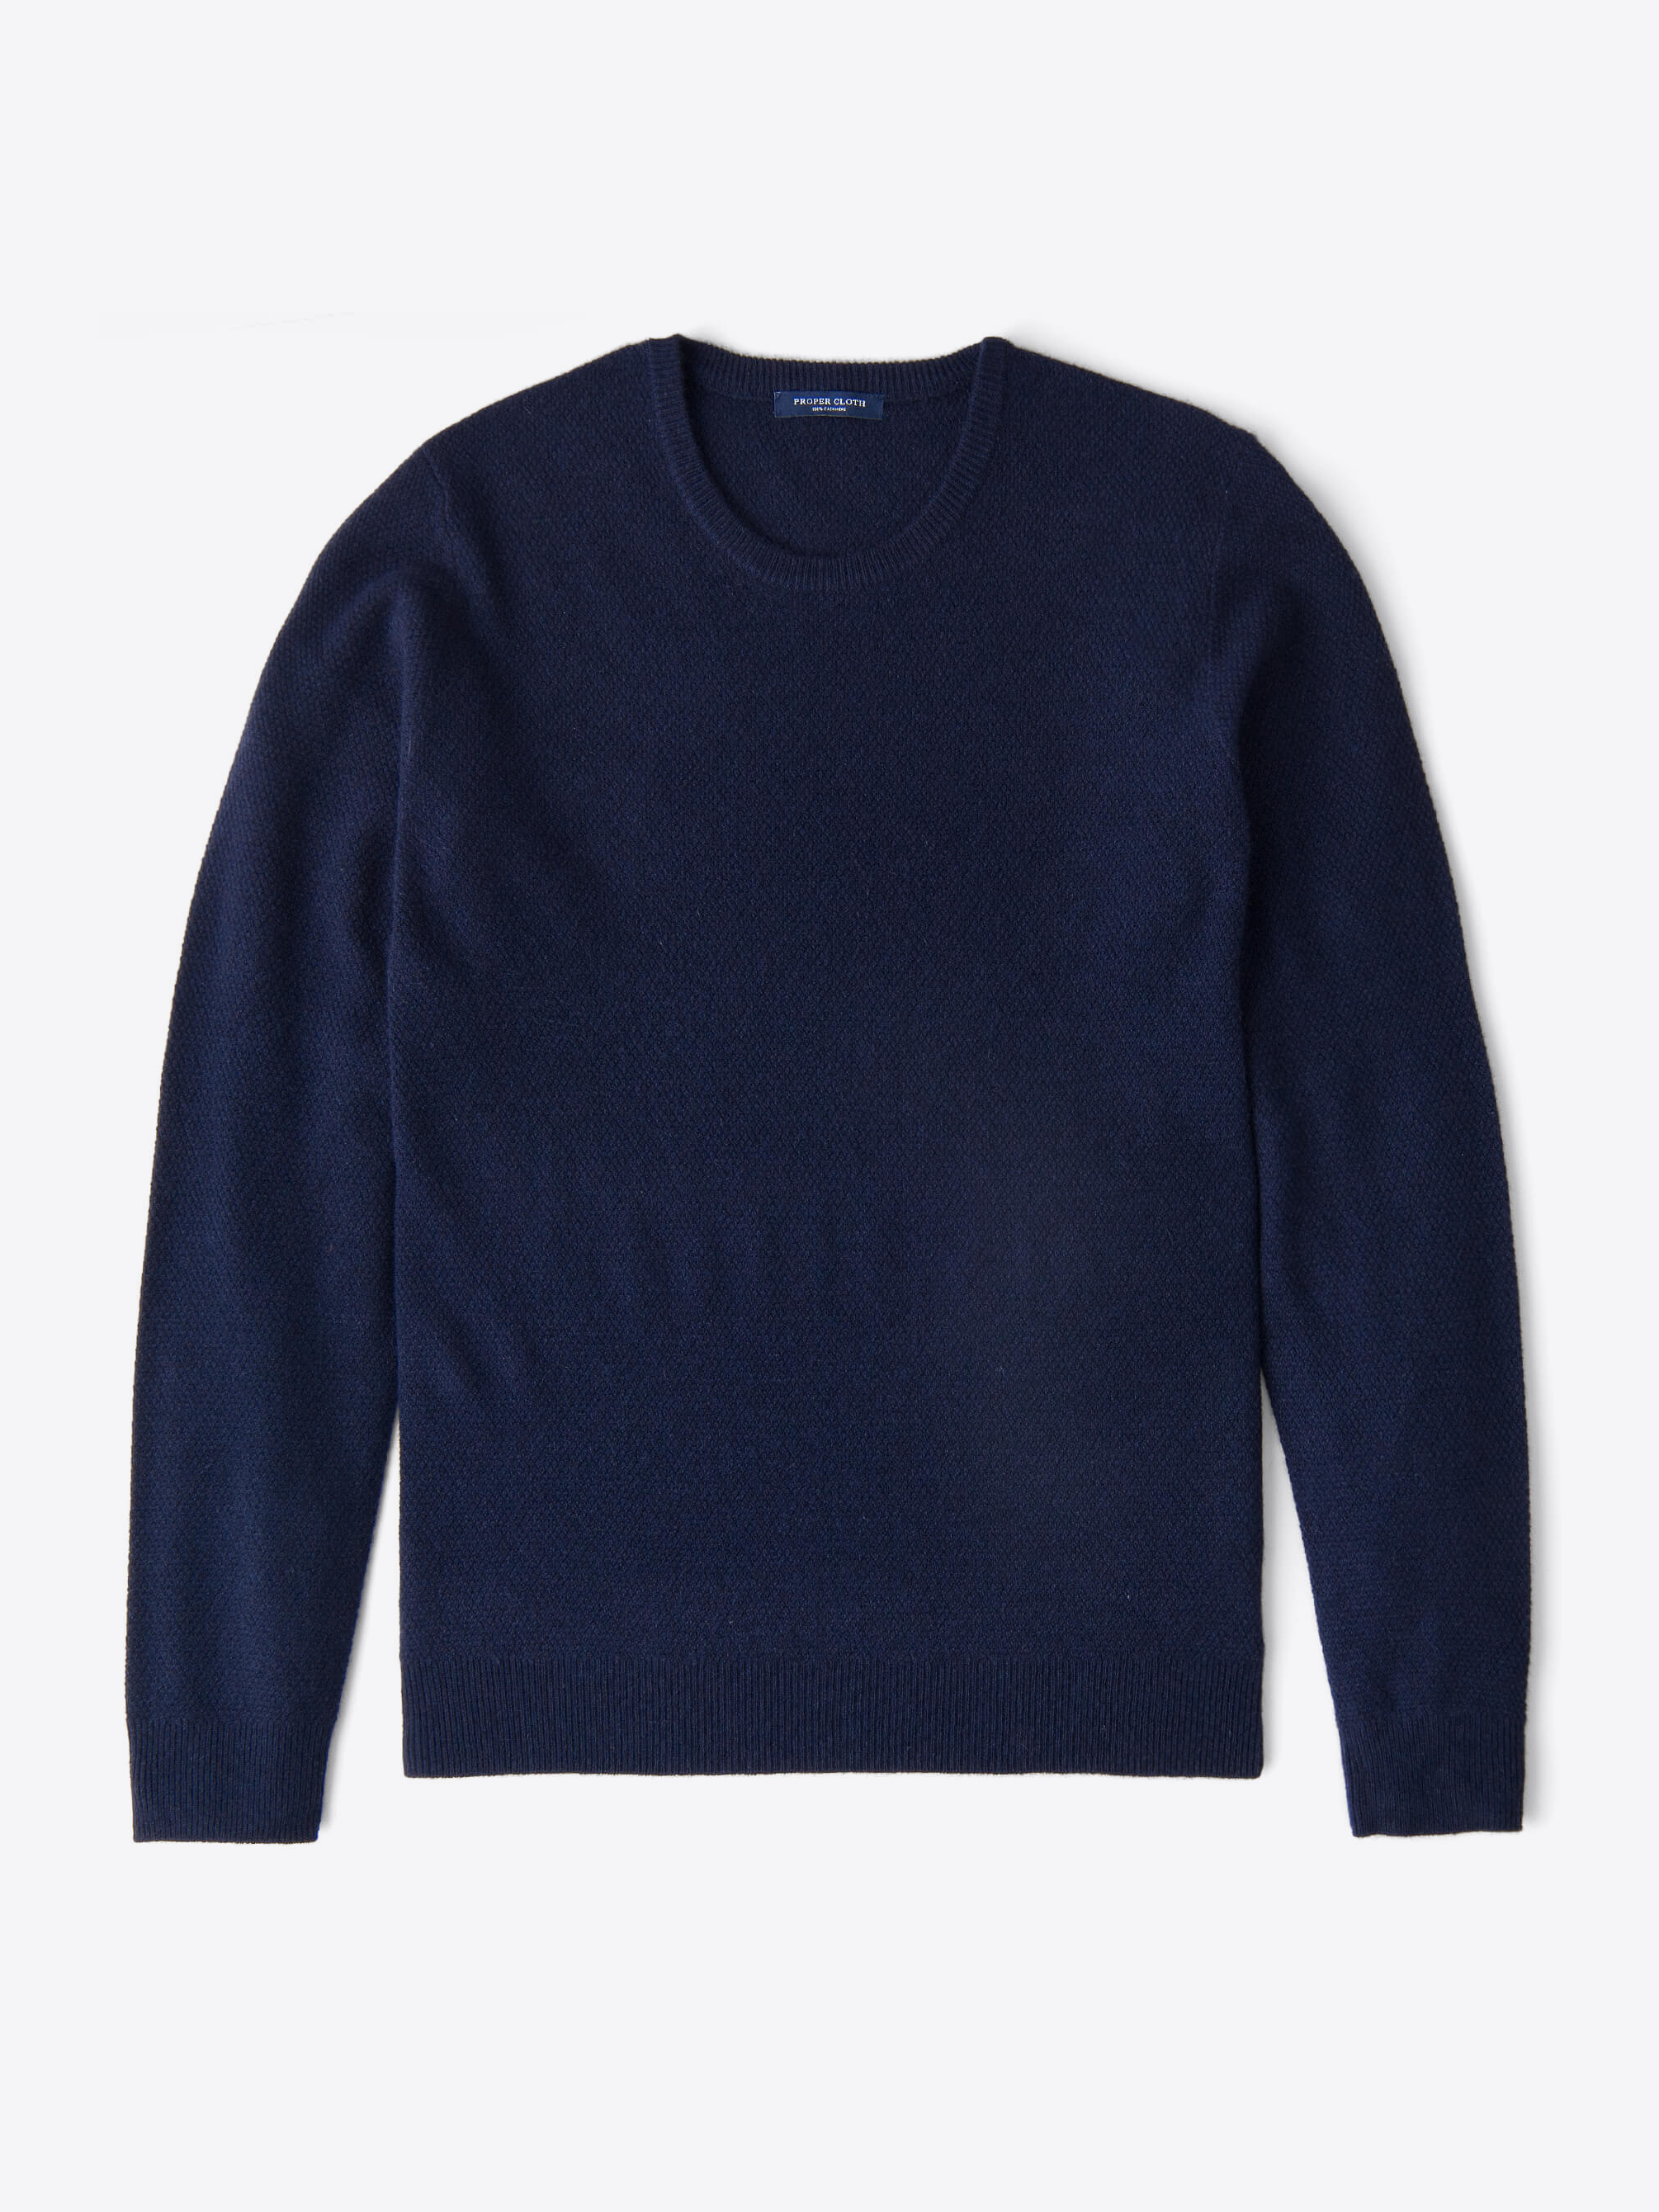 Zoom Image of Navy Cobble Stitch Cashmere Crewneck Sweater